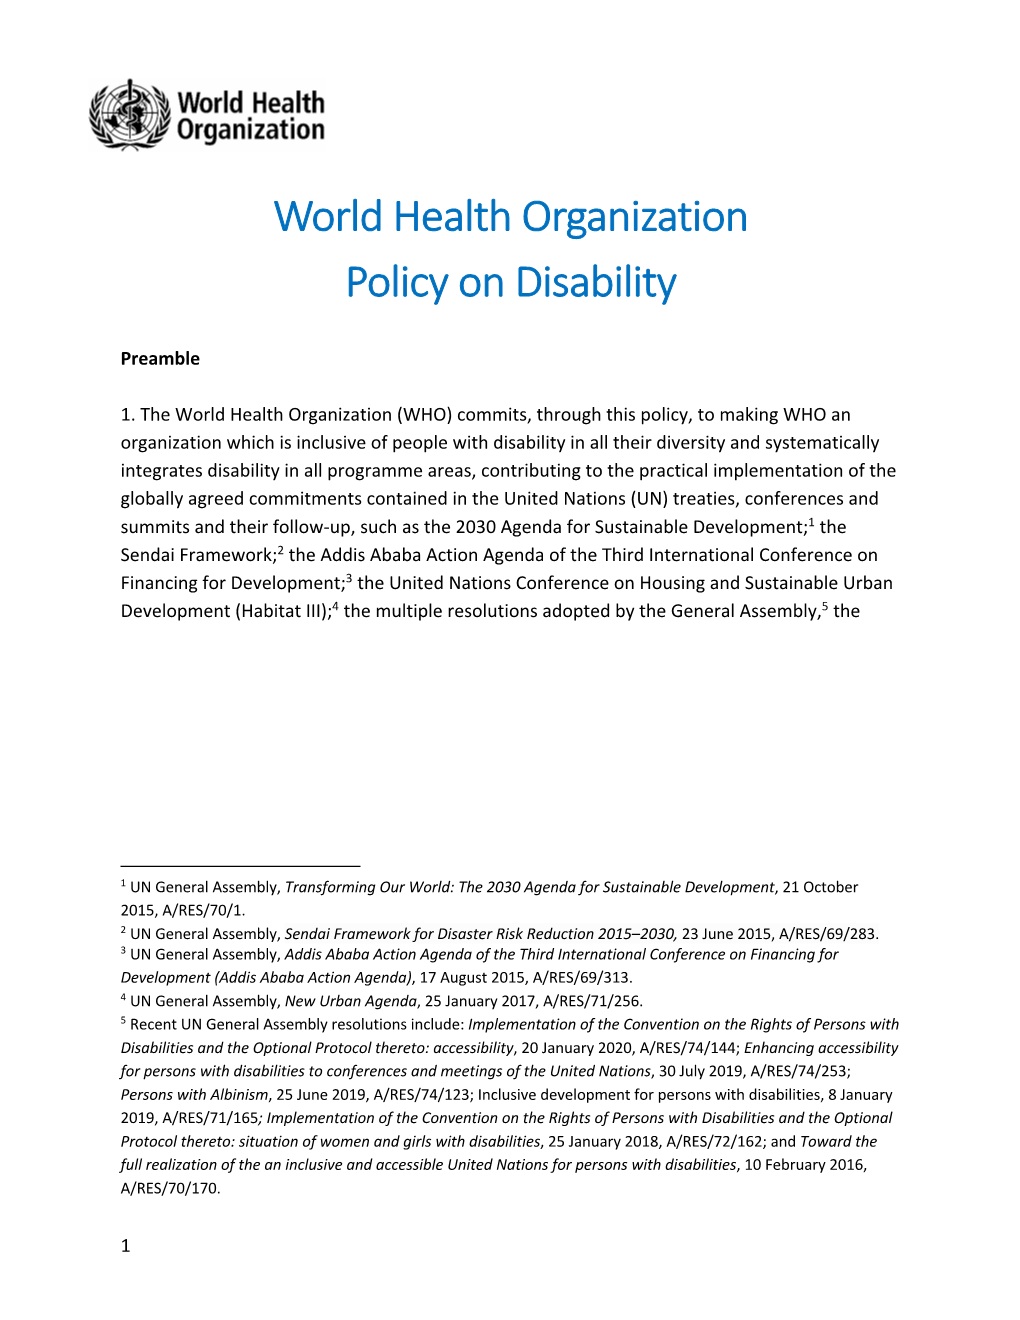 World Health Organization Policy on Disability